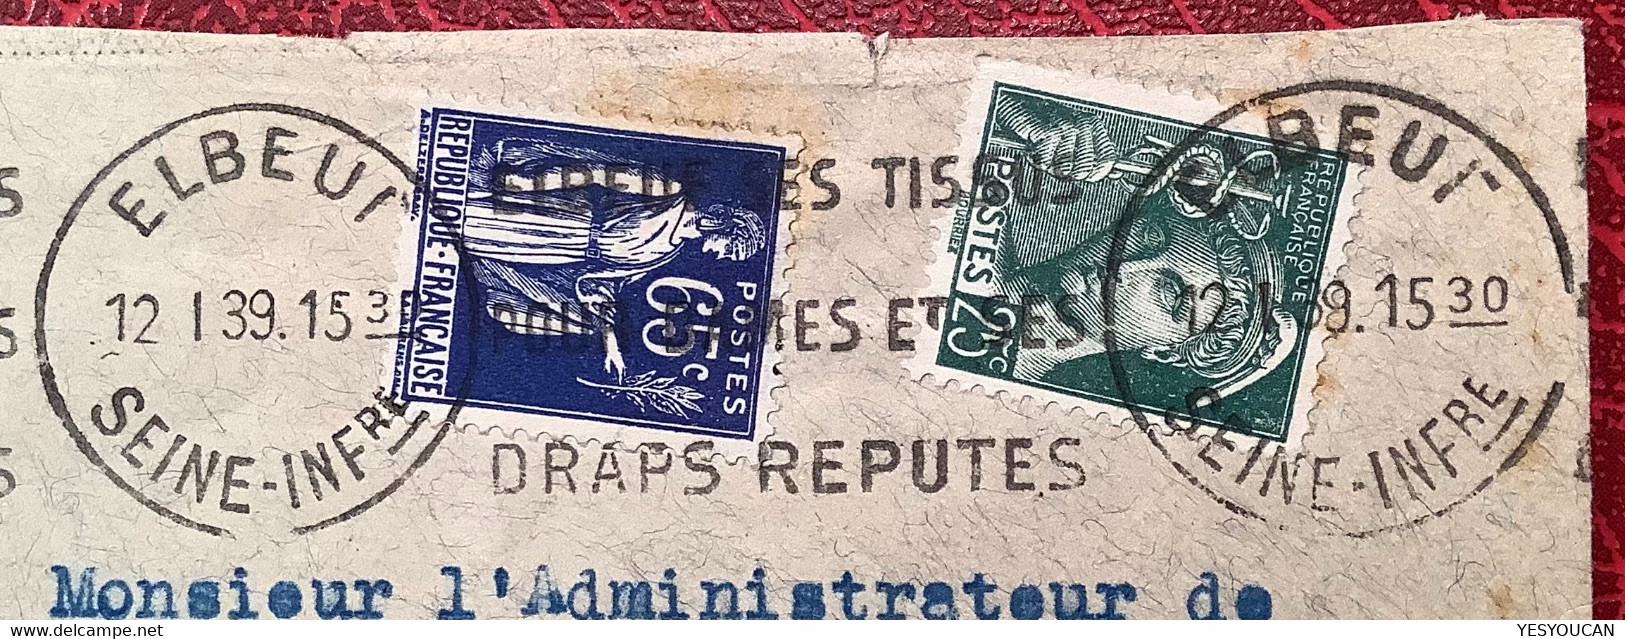 NIEDERLENZ AARGAU 1939 Schweiz Nachportomarken 1937+1938 Brief France Paix+Mercure Elbeuf(Portomarke Lettre Taxé Textile - Strafportzegels